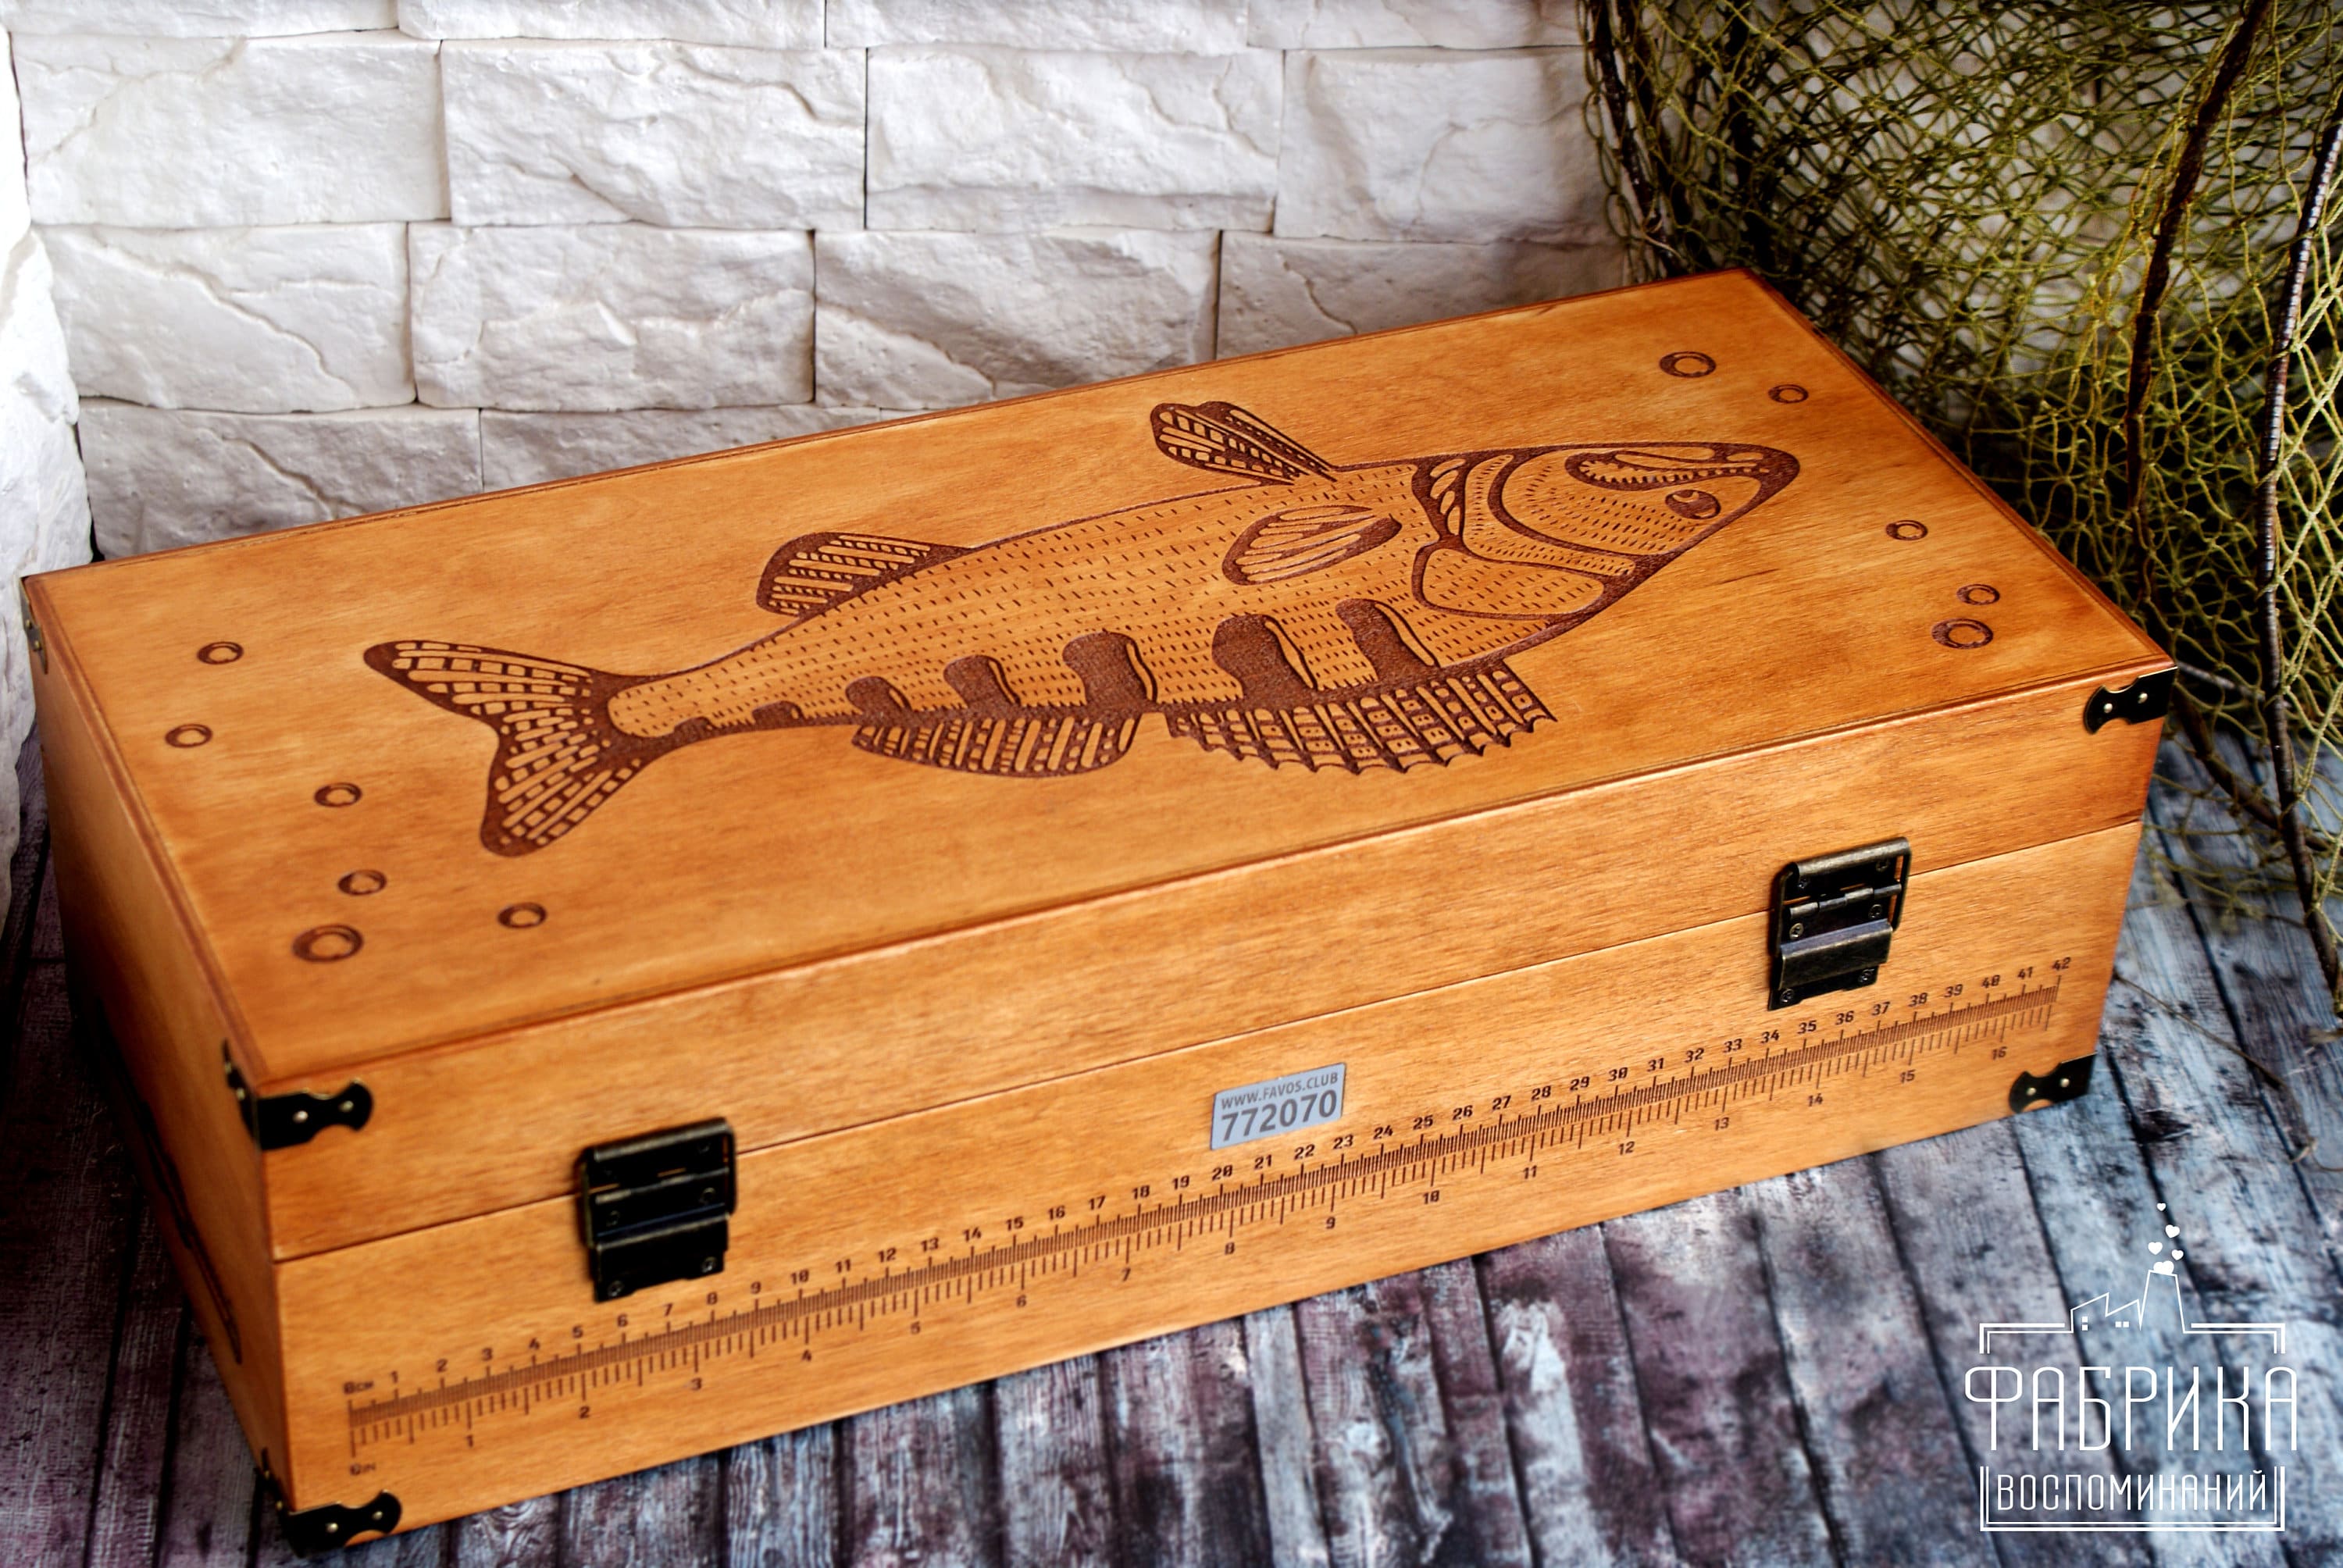 Personalized Handmade Wood Fishing Tackle Box mr. Zander, Tackle Box for  Fishing, Father's Day Gift, Corporate Gift, Large Tacke Fish Box 